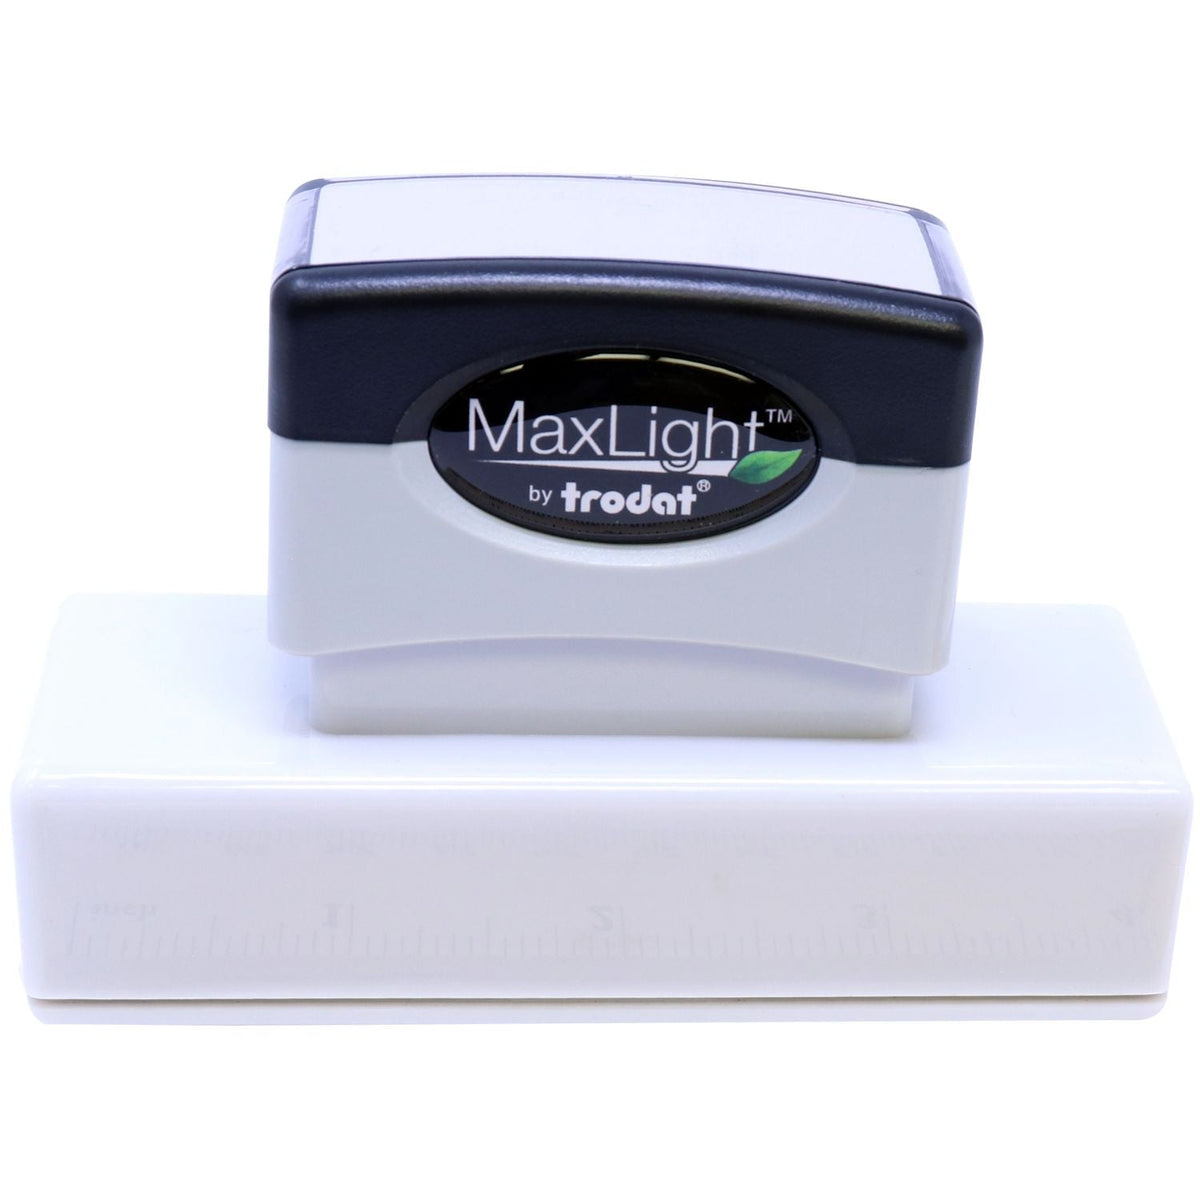 Maxlight Custom Stamp Xl2 265 Top Front Alt 1